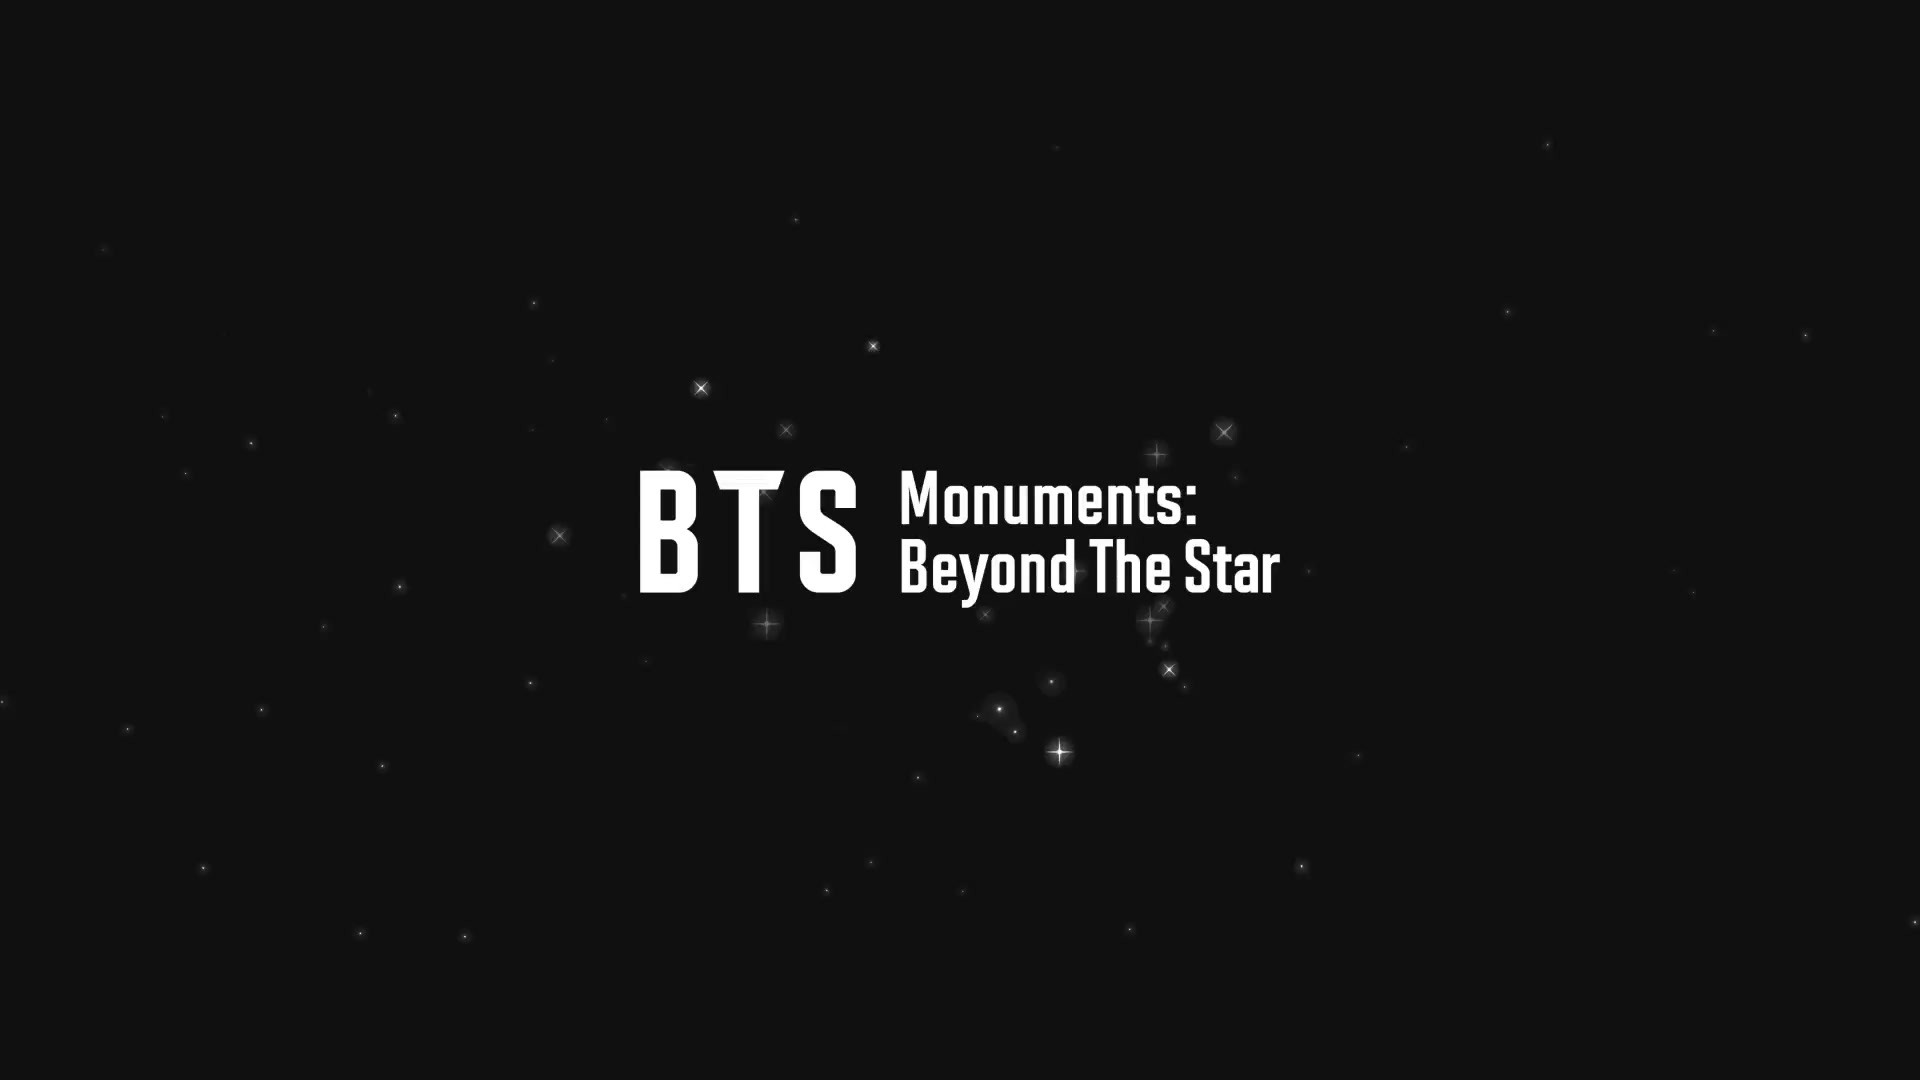 BTS Monuments: Beyond The Star[예고편]